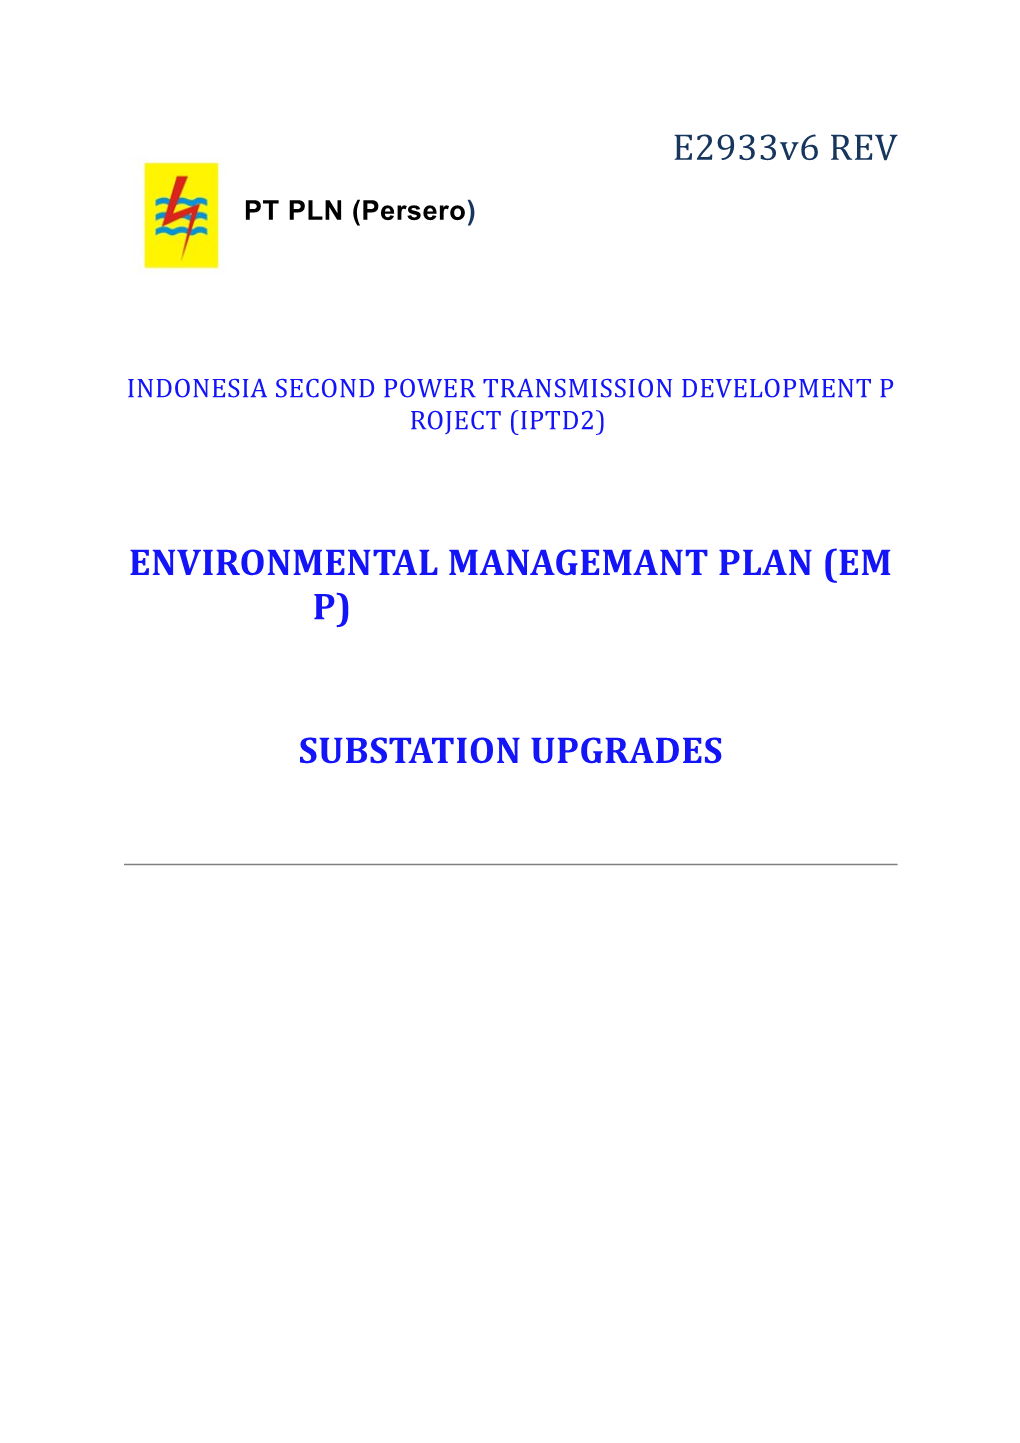 Environmental Managemant Plan (Emp)